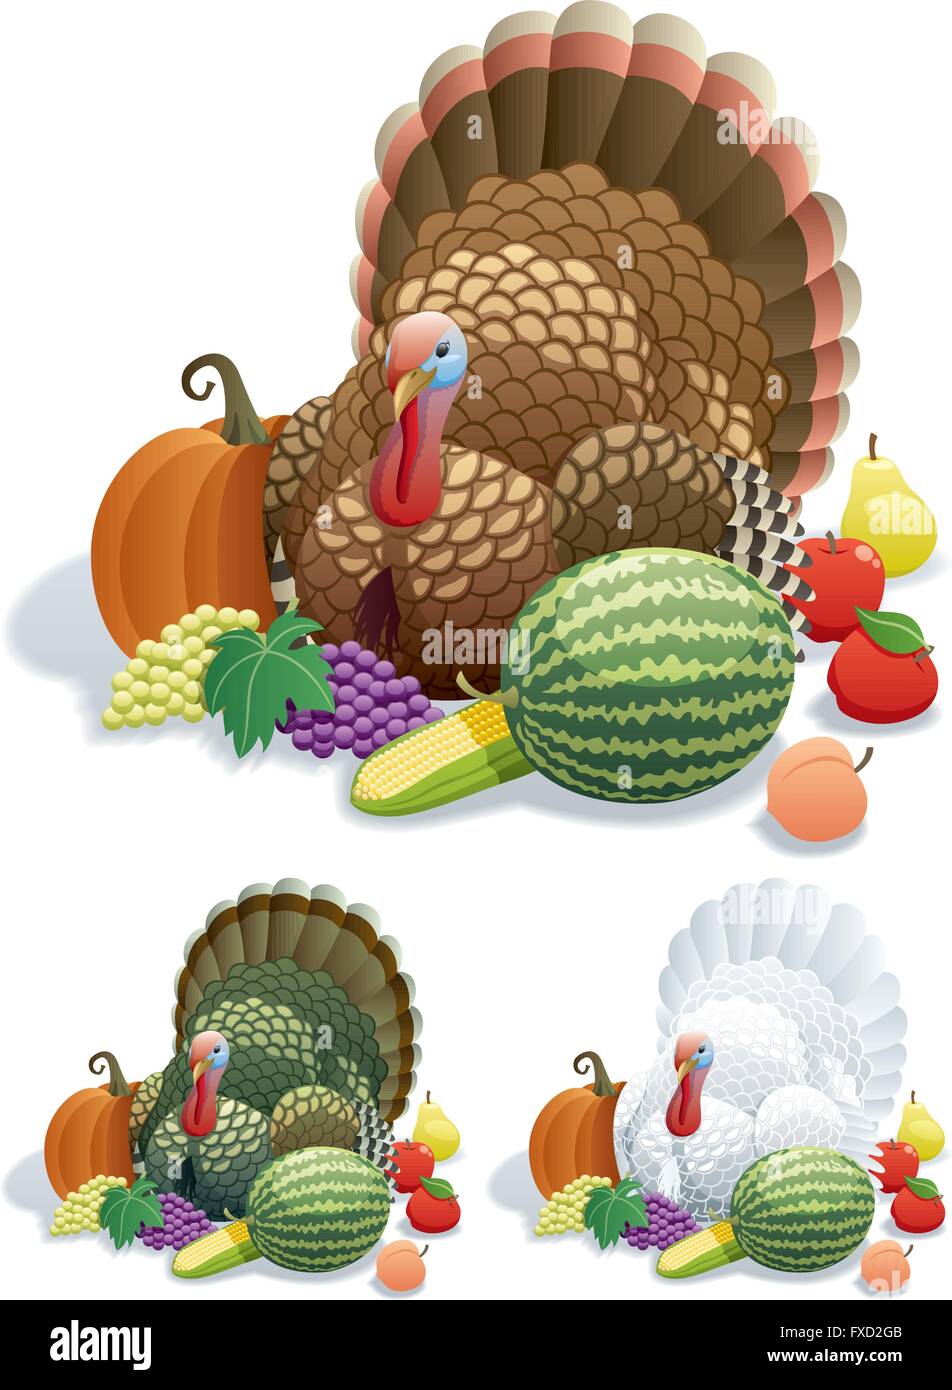 Thanksgiving-Truthahn in 3 Versionen. Stock Vektor